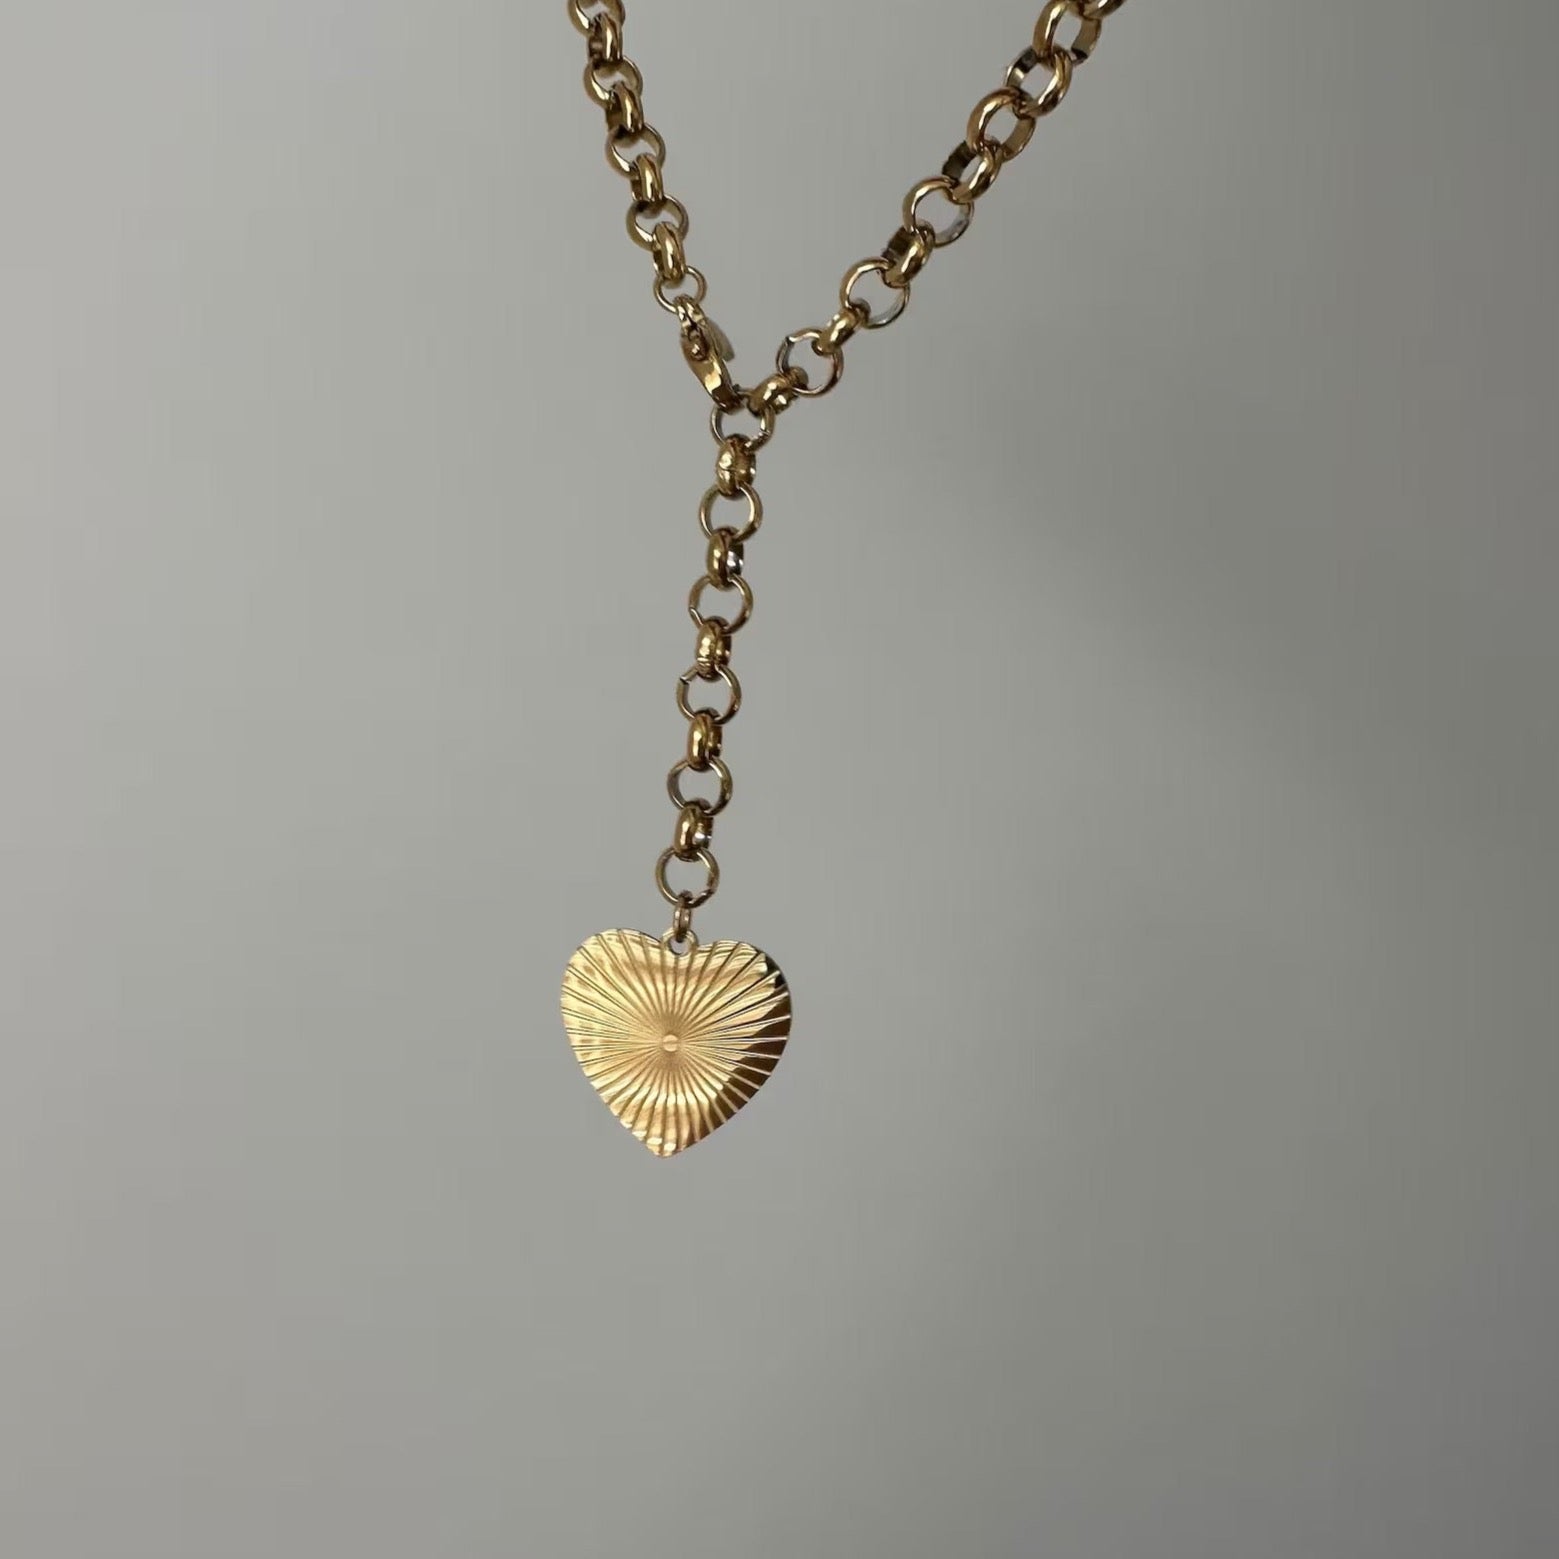 Heart Pendant Necklace offering timeless elegance